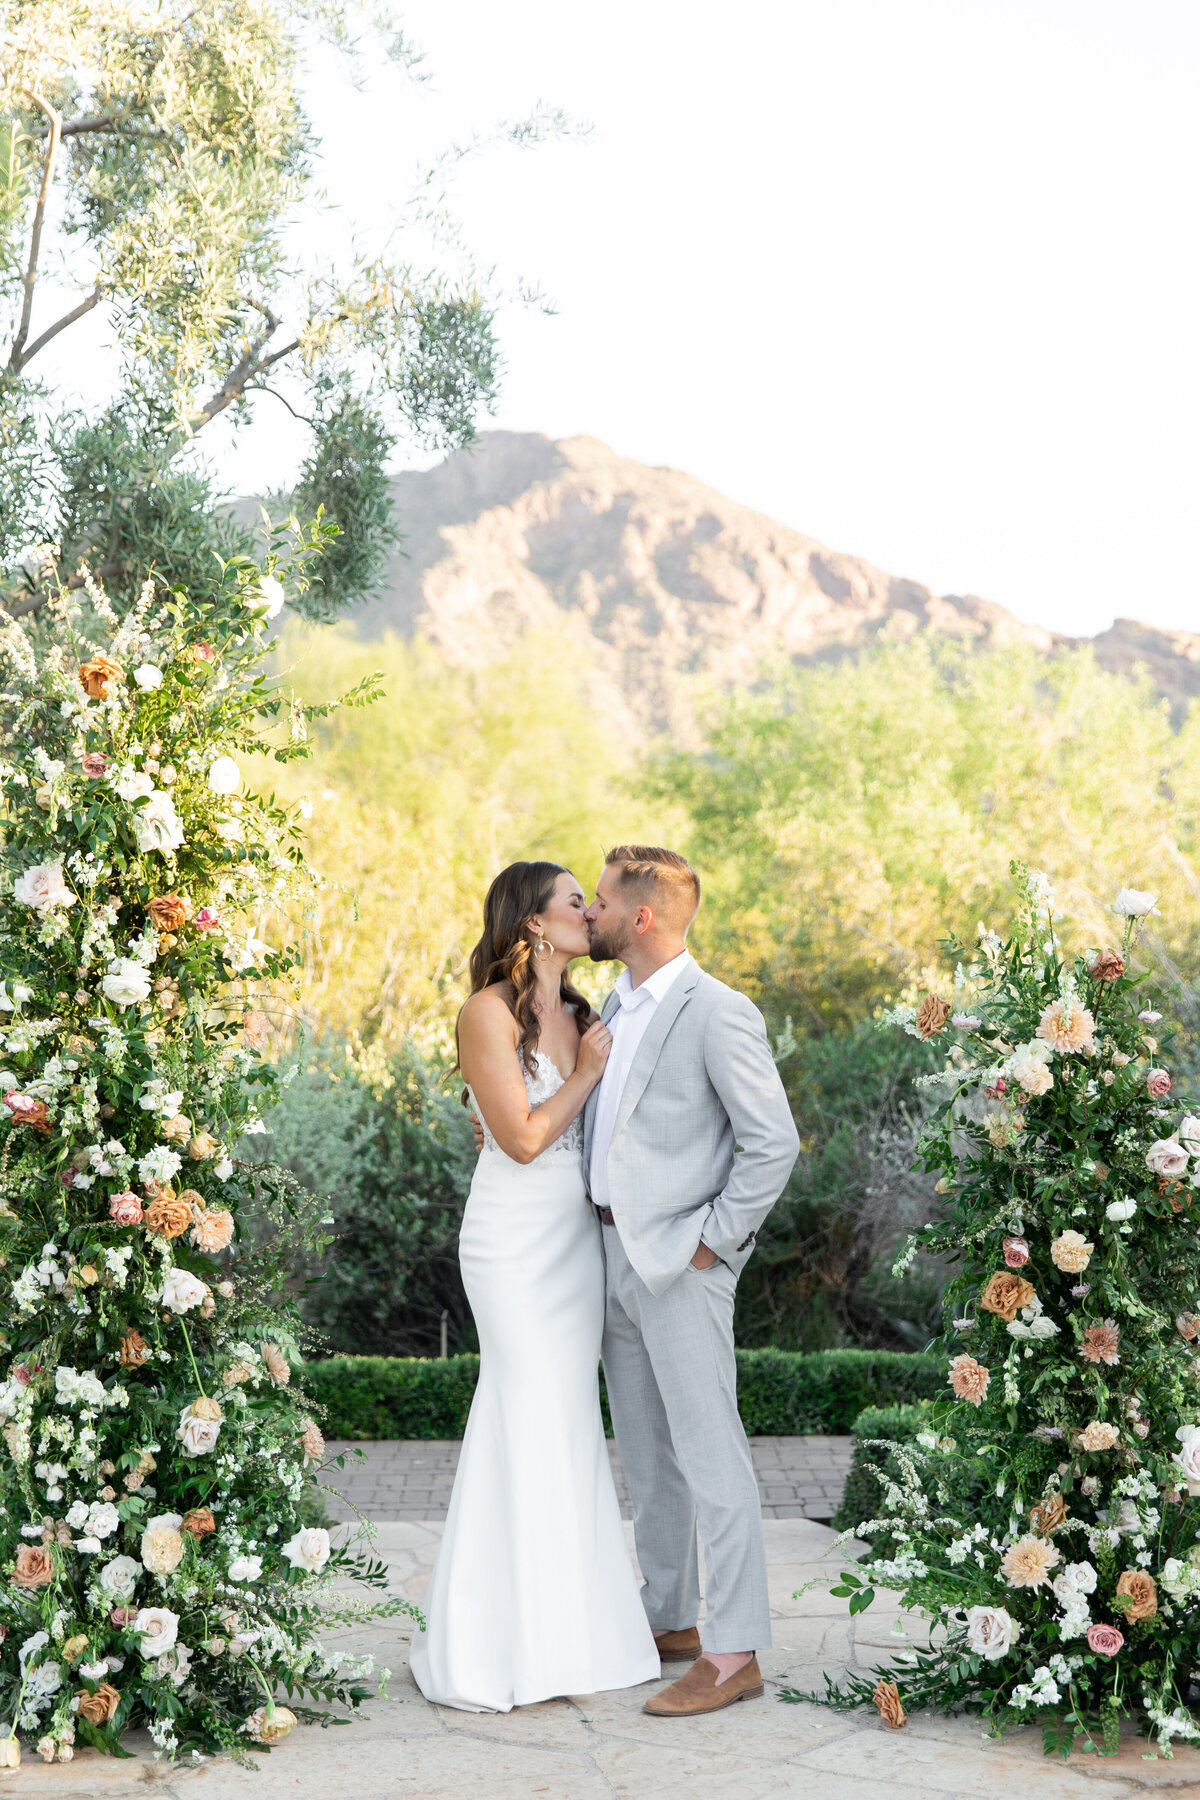 Karlie Colleen Photography - Taylor & Kevin Wedding - Shannon Smith Weddings - El Chorro-233